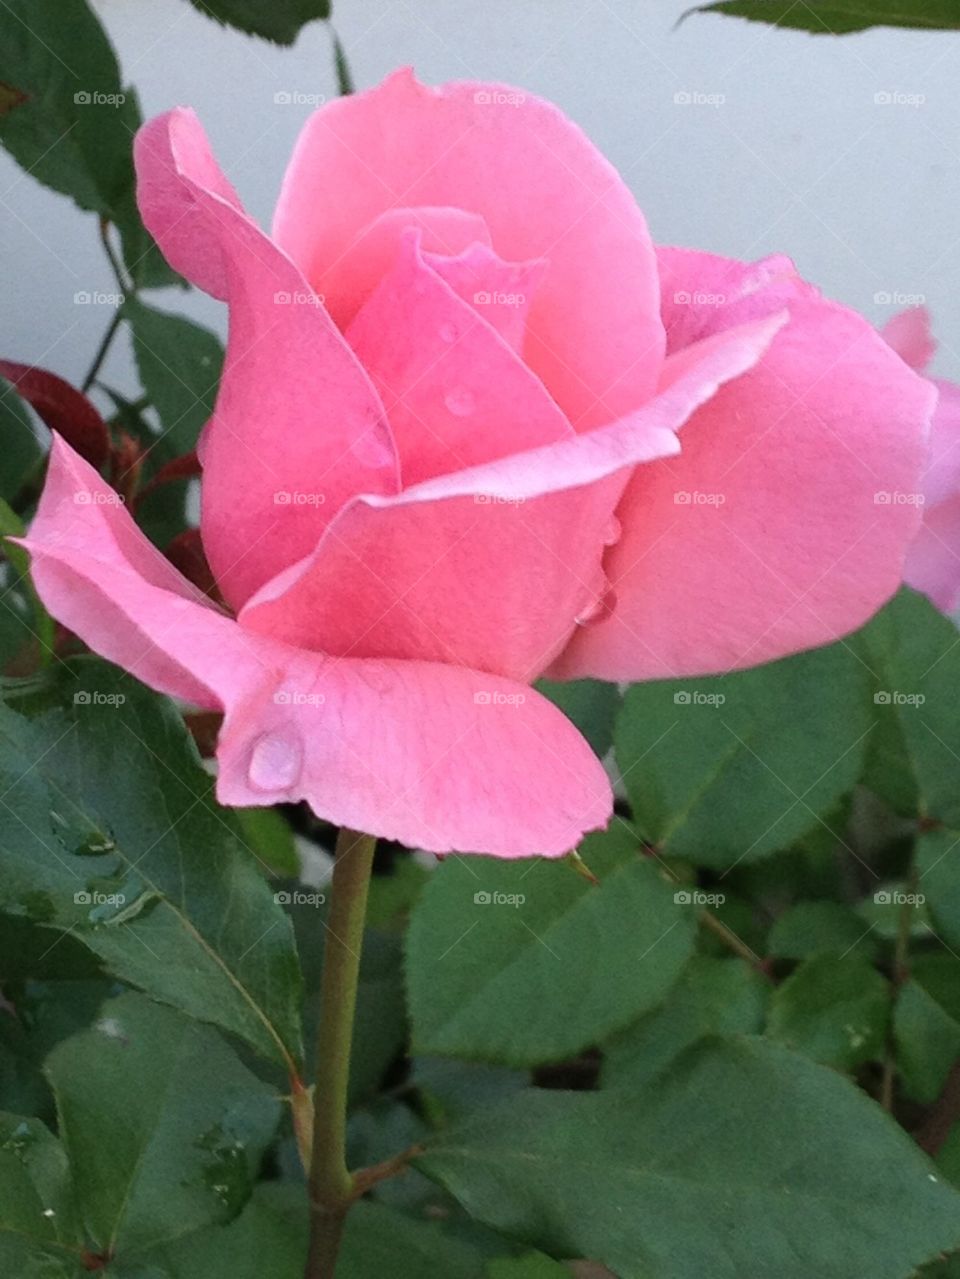 Pink antique rose